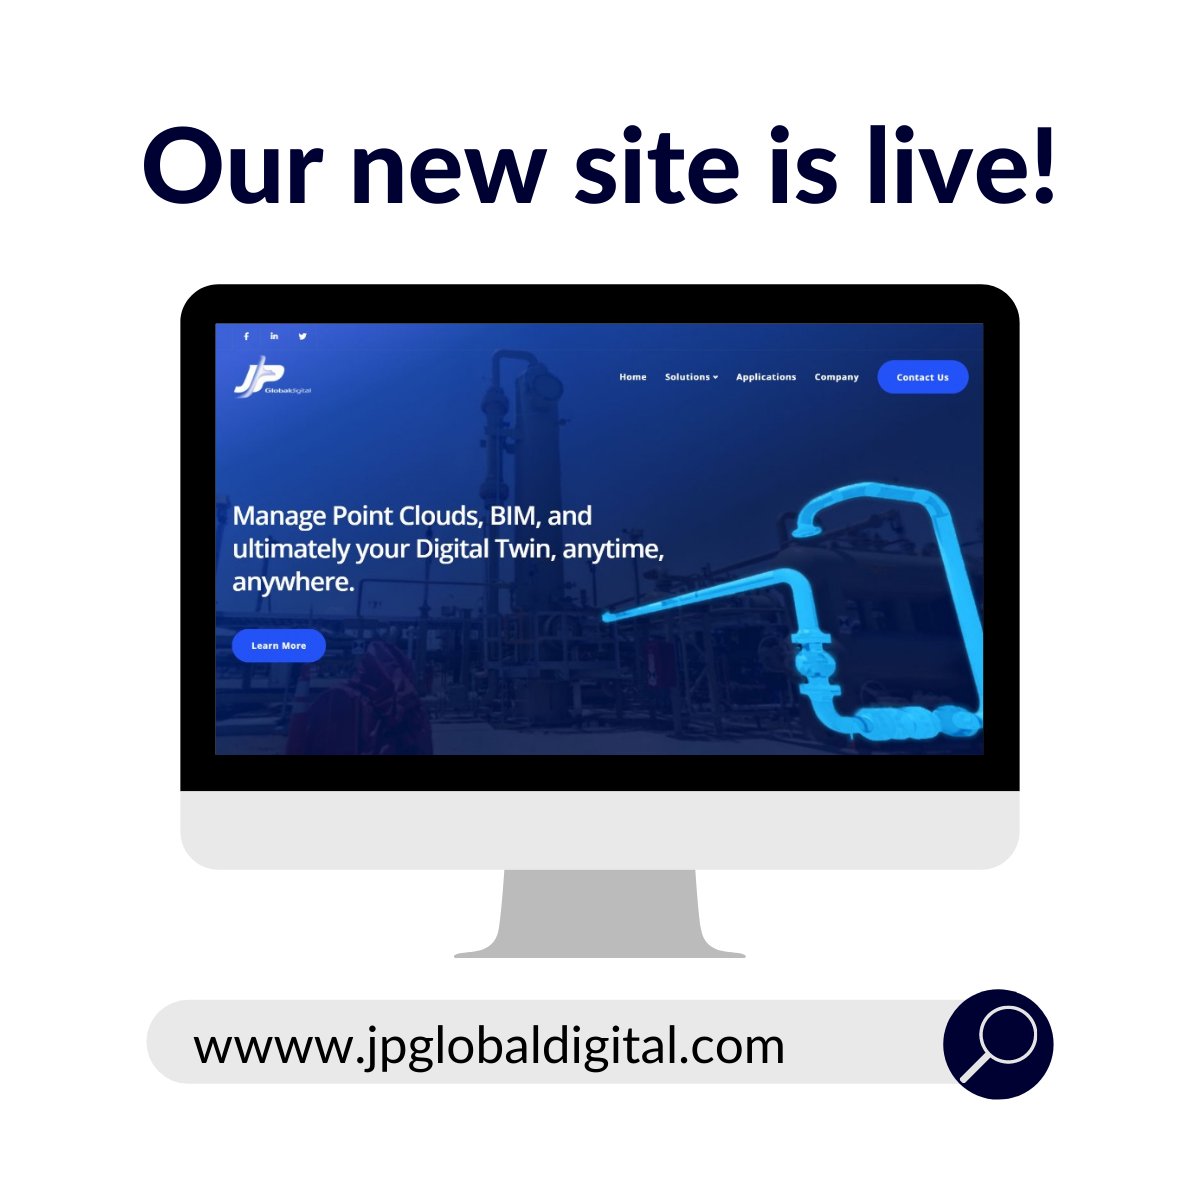 Have you seen our new website? We designed it for you! jpglobaldigital.com